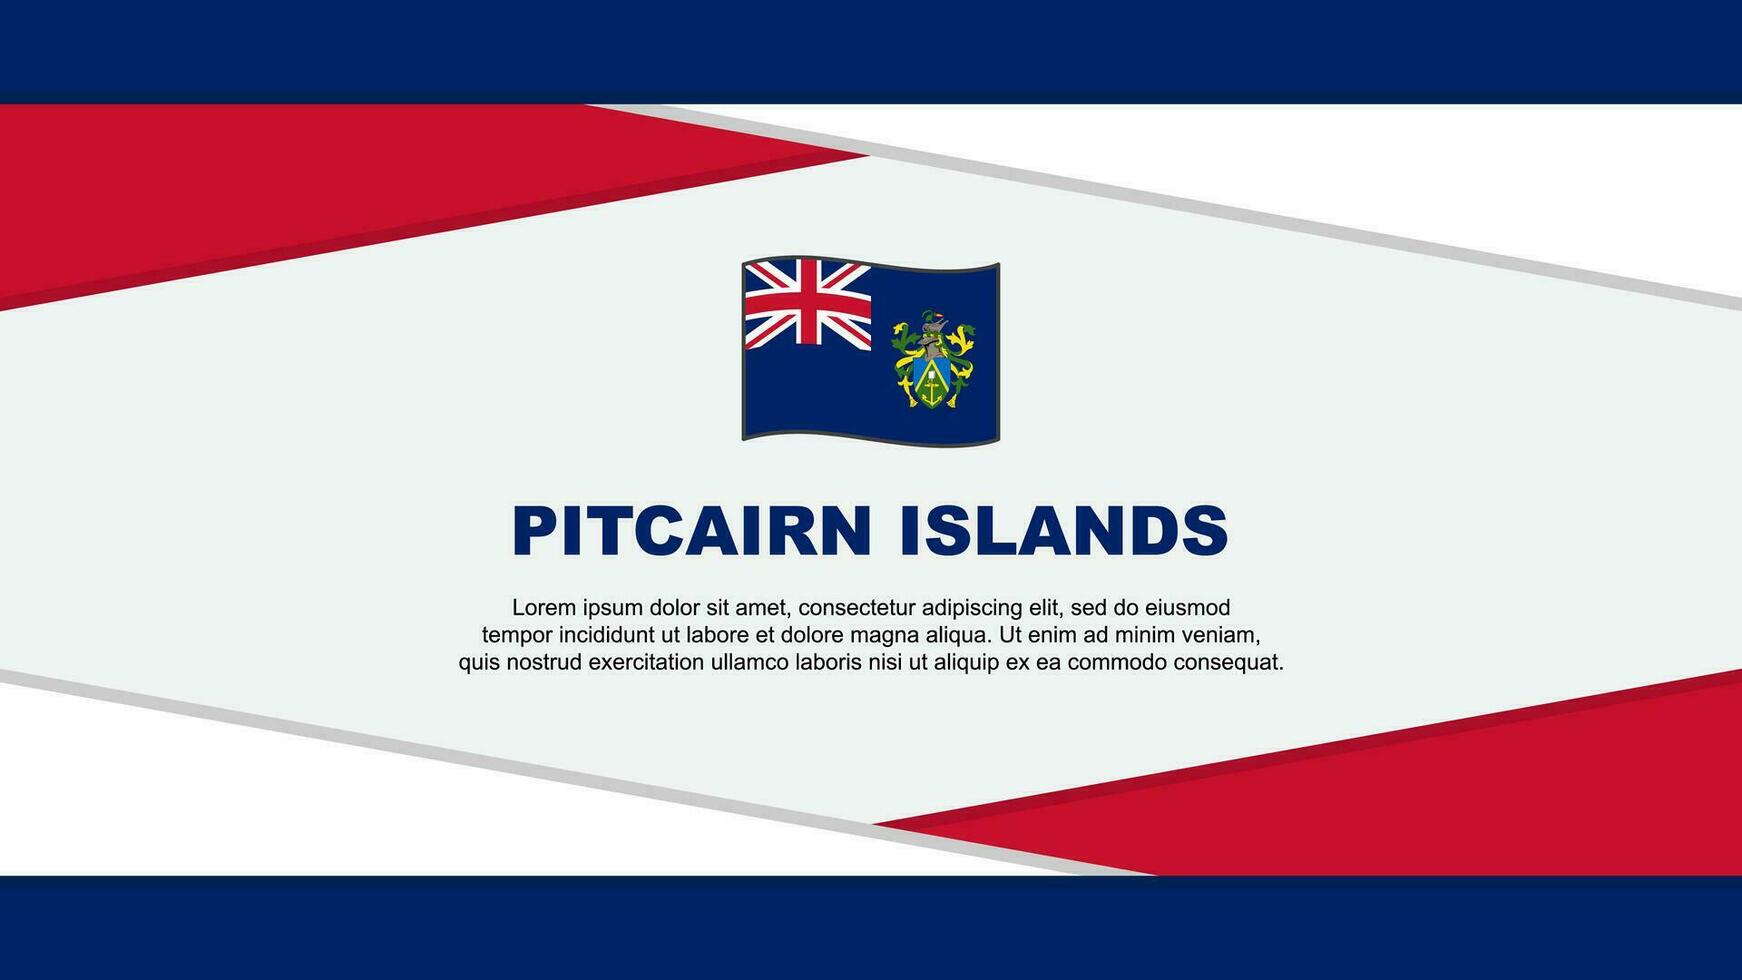 Pitcairn Islands Flag Abstract Background Design Template. Pitcairn Islands Independence Day Banner Cartoon Vector Illustration. Pitcairn Islands Vector